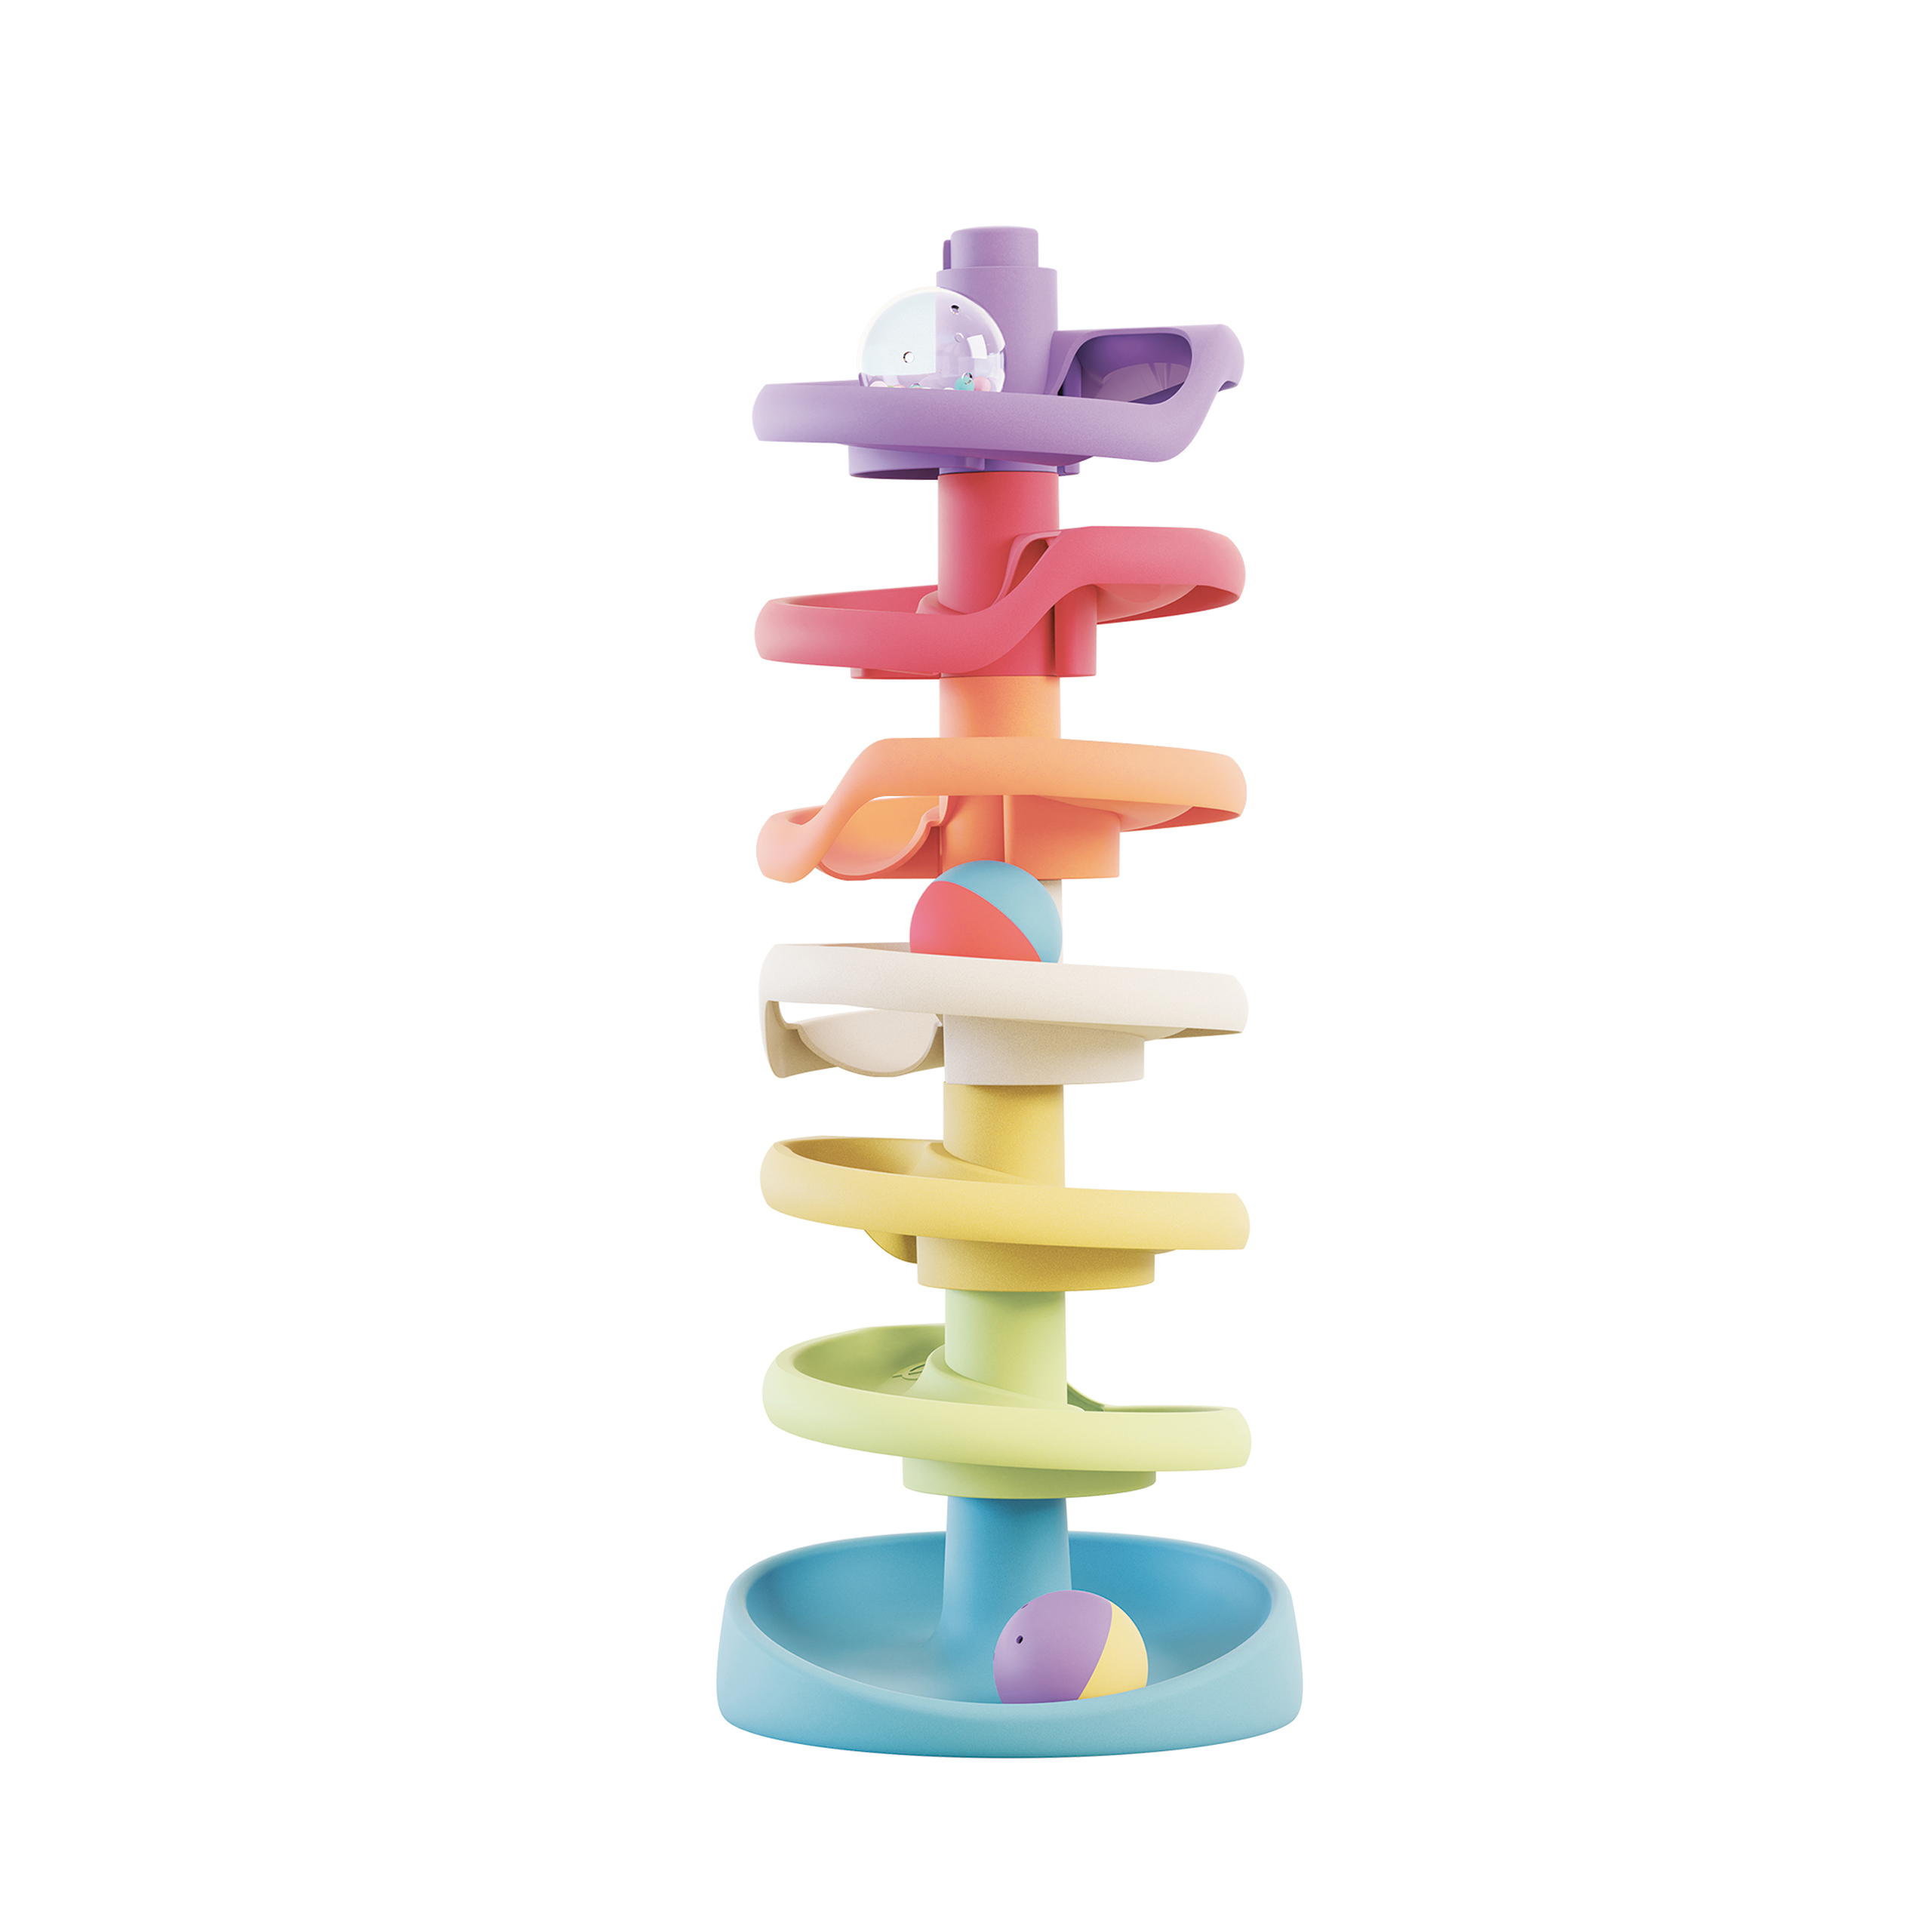 Konstruktionsspielzeug quercetti  marble run spiral tower play eco+